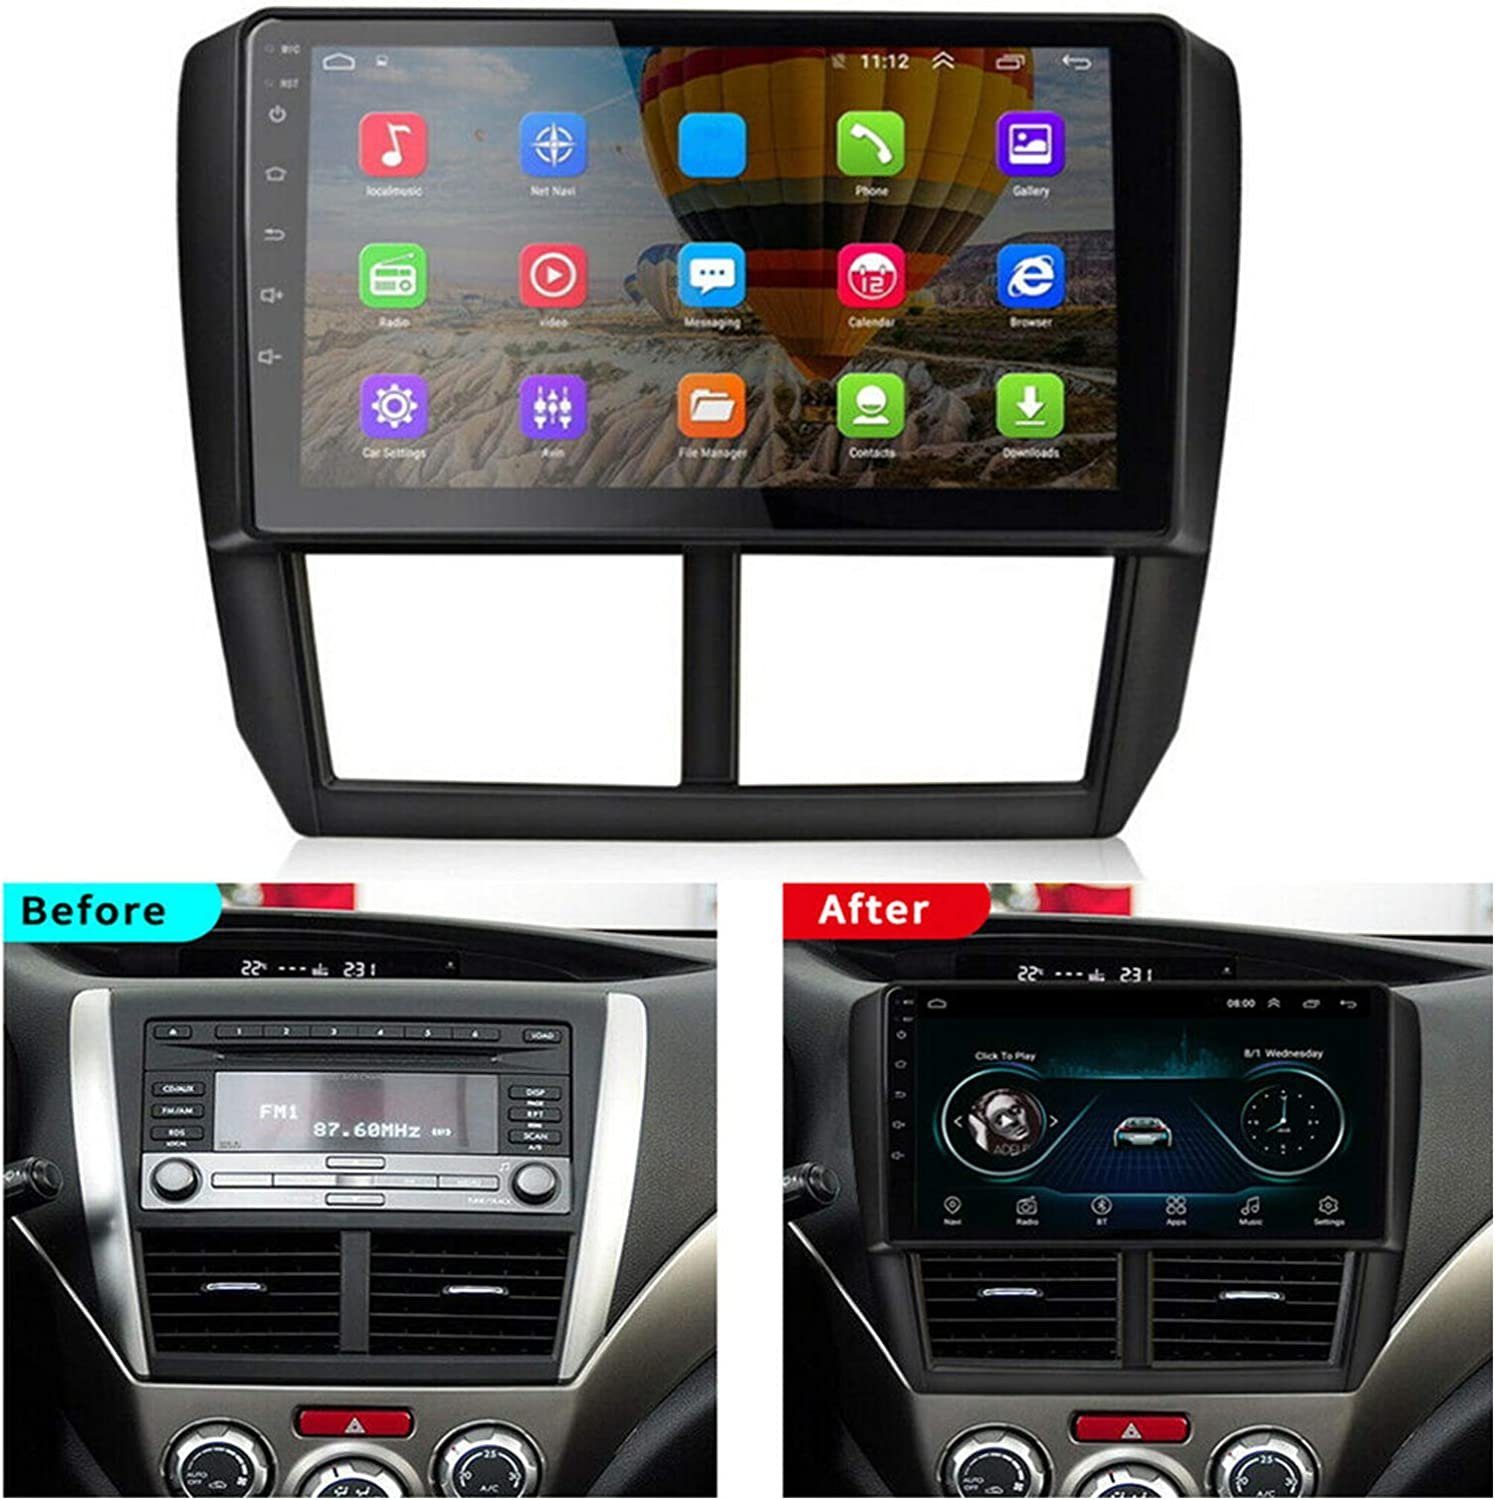 GABITECH Für Subaru Forester Autoradio impreza Android Einbau-Navigationsgerät Zoll 2007-2013. 9 GPS 11